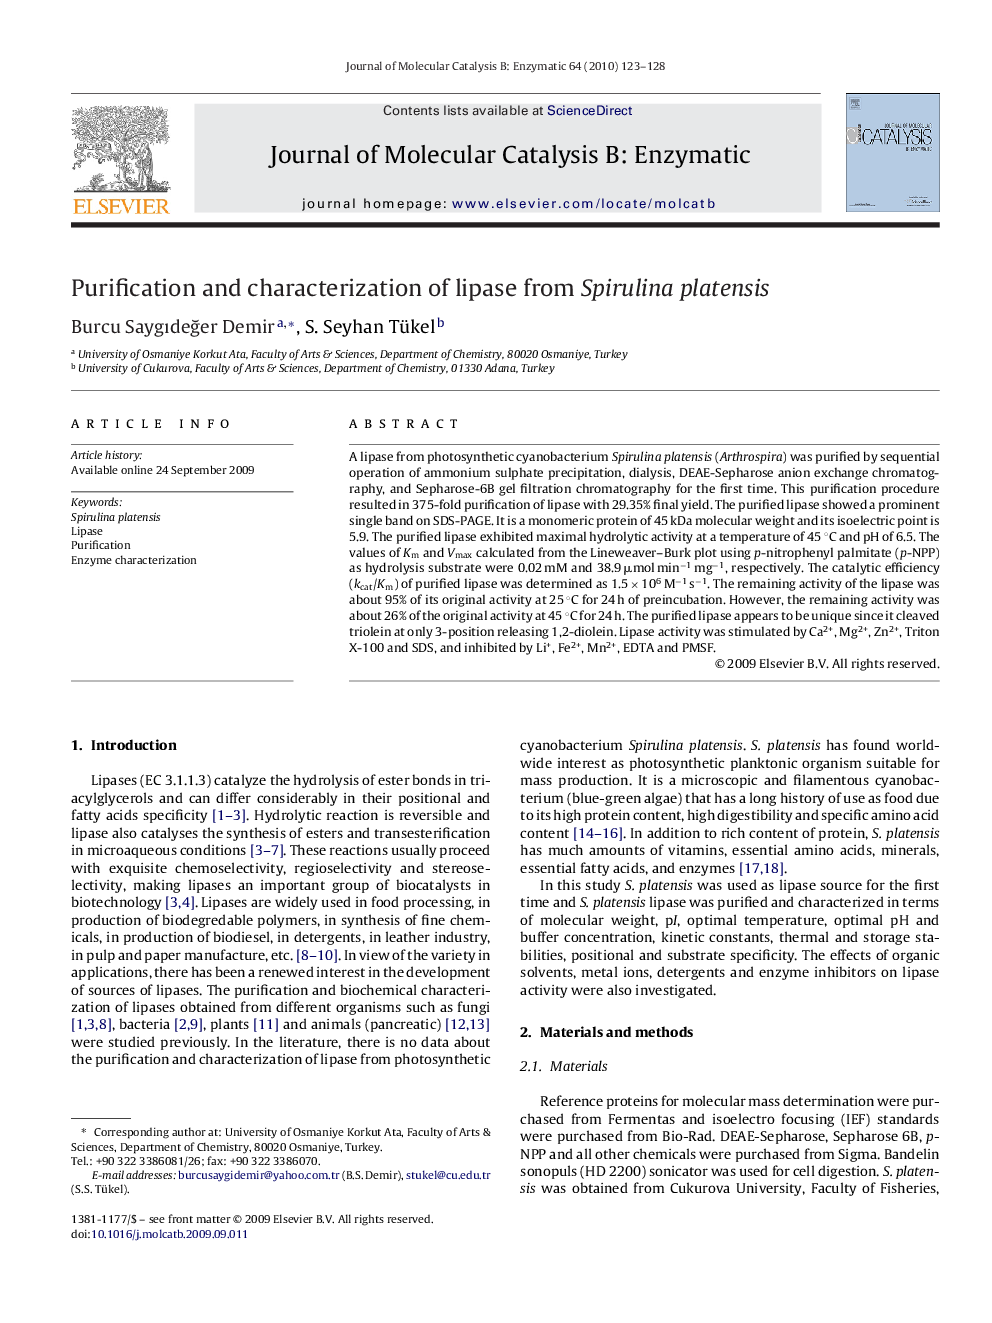 Purification and characterization of lipase from Spirulina platensis